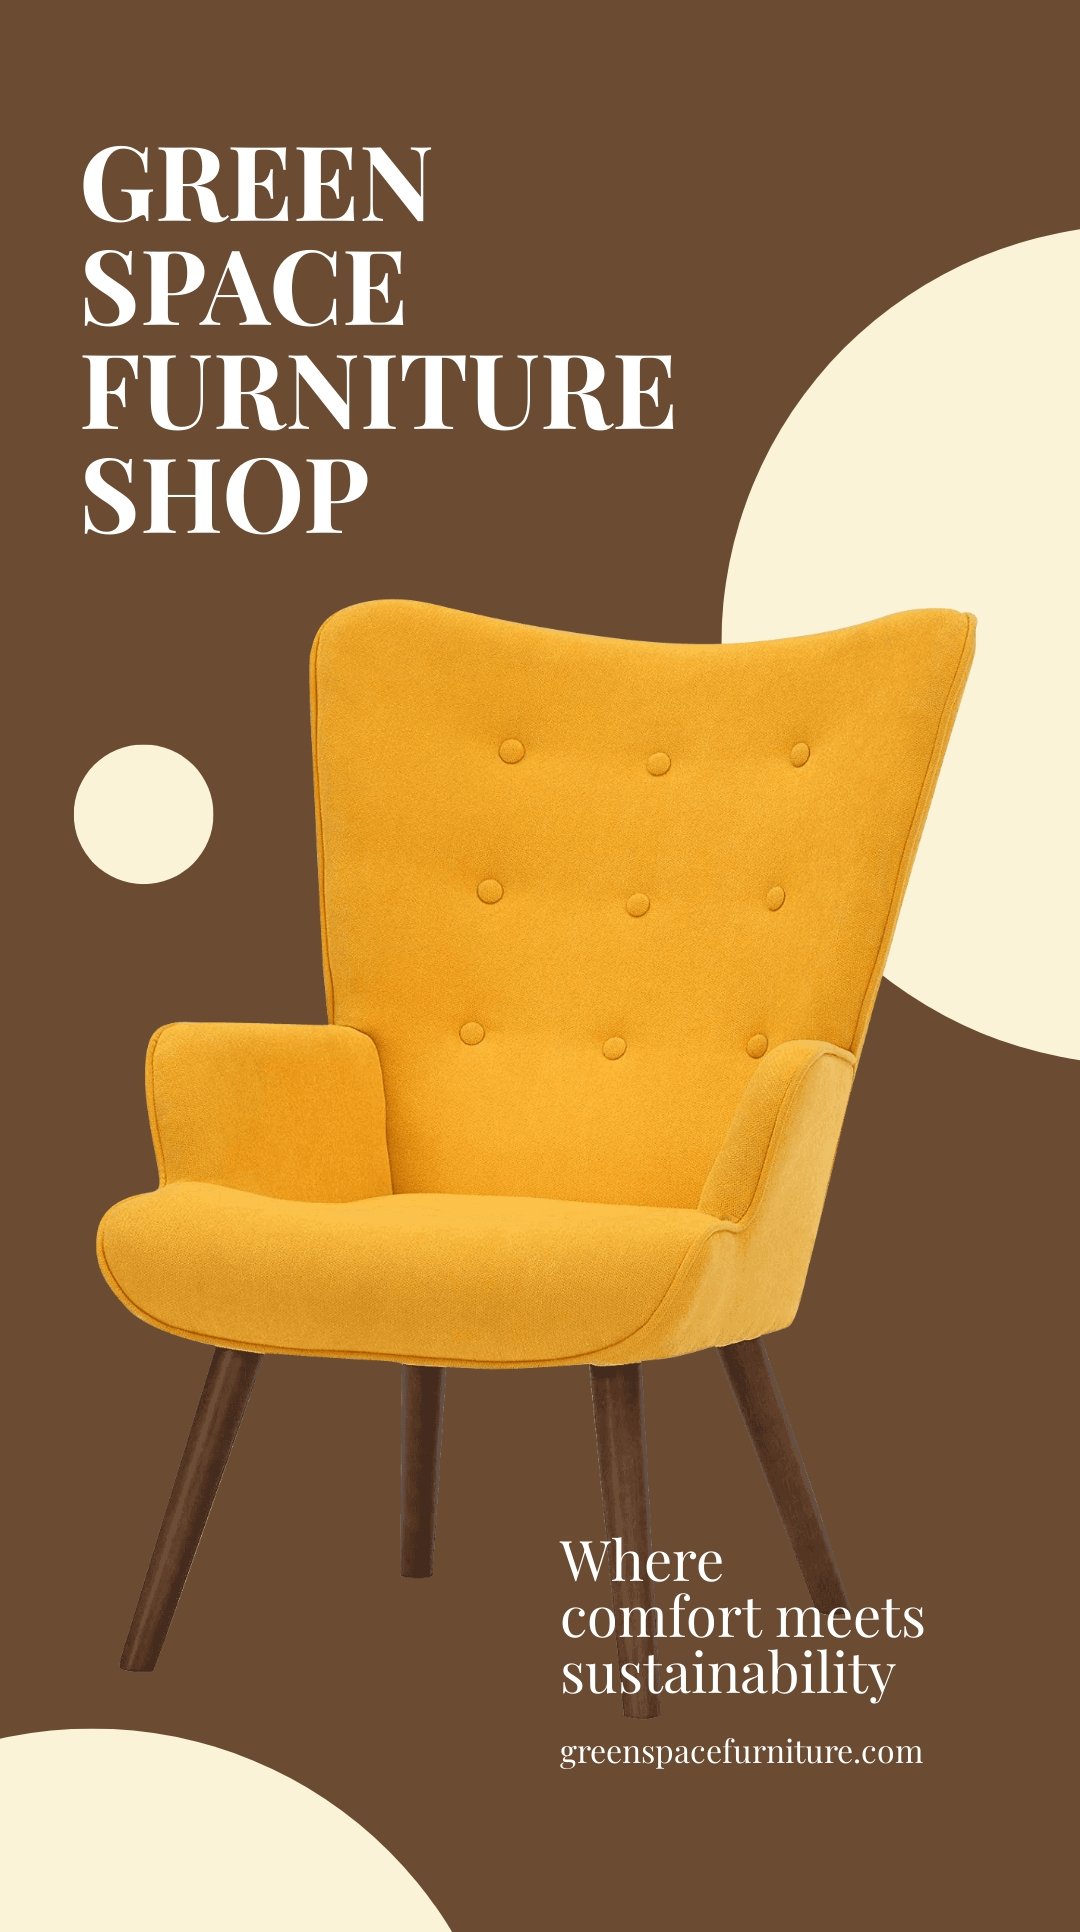 Online Furniture Shop WhatsApp Post